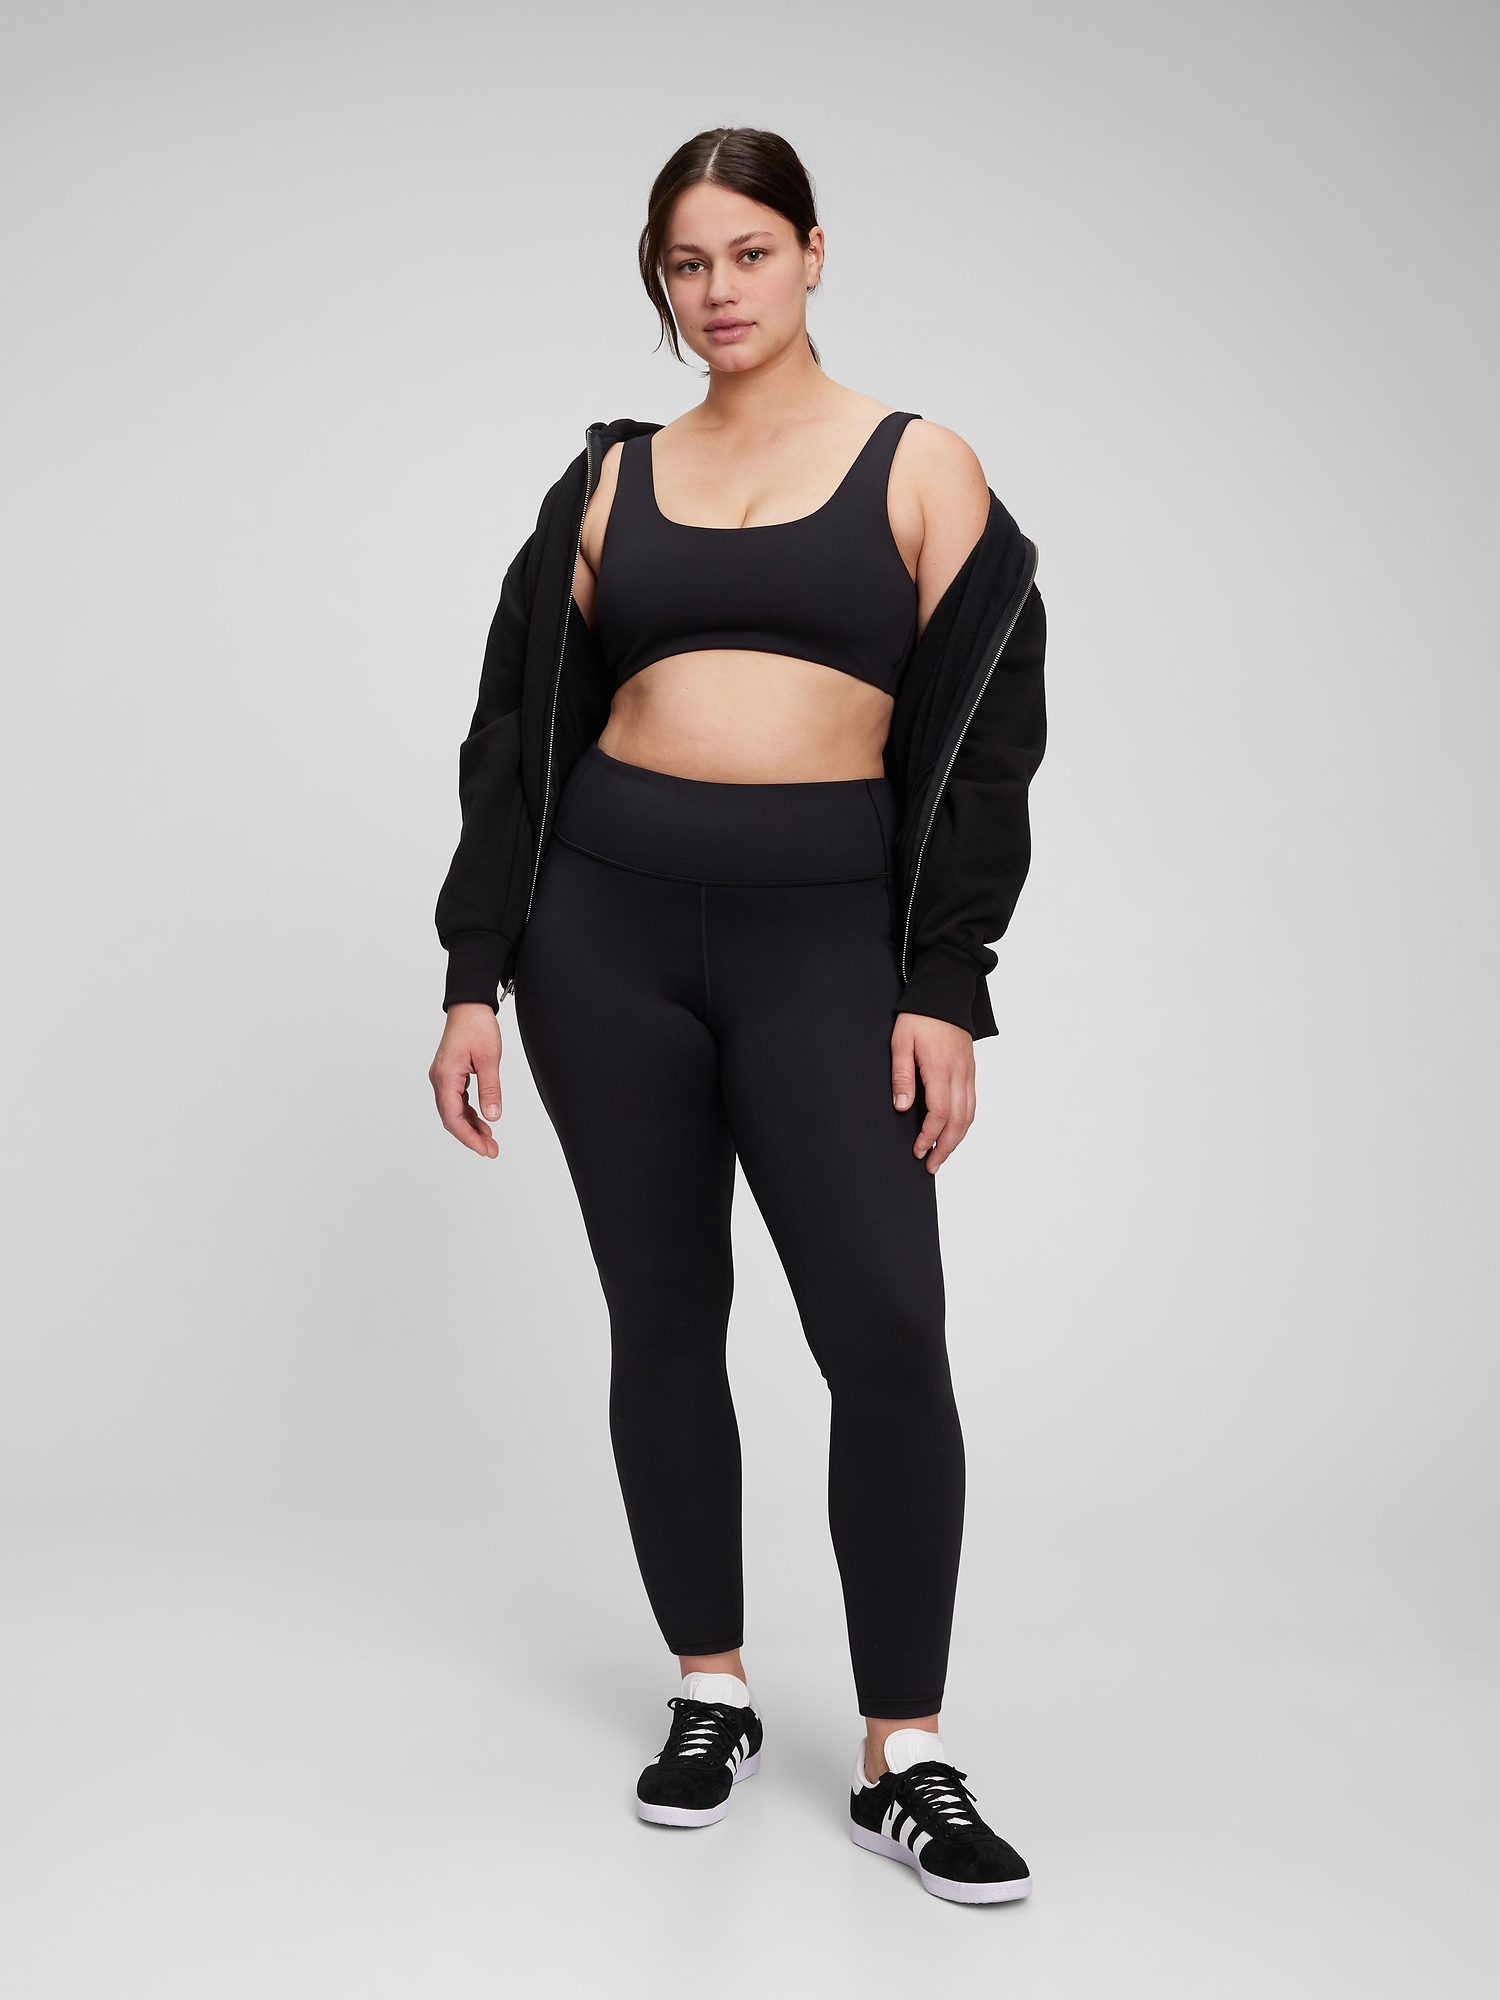 GAP Woman's Black Solid colour high-rise leggings